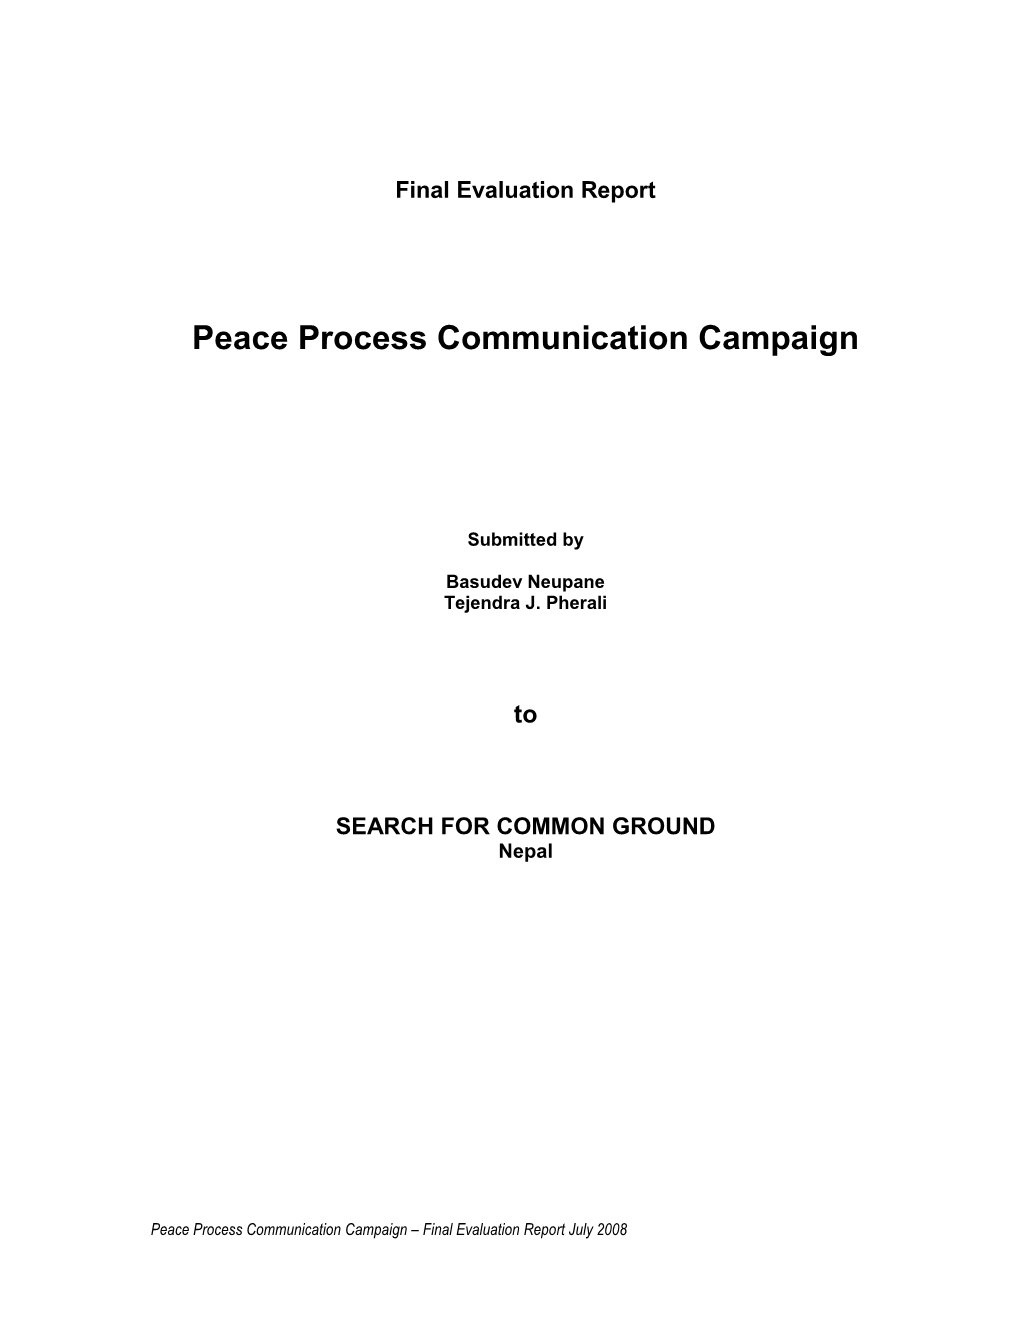 Peace Process Communication Campaign